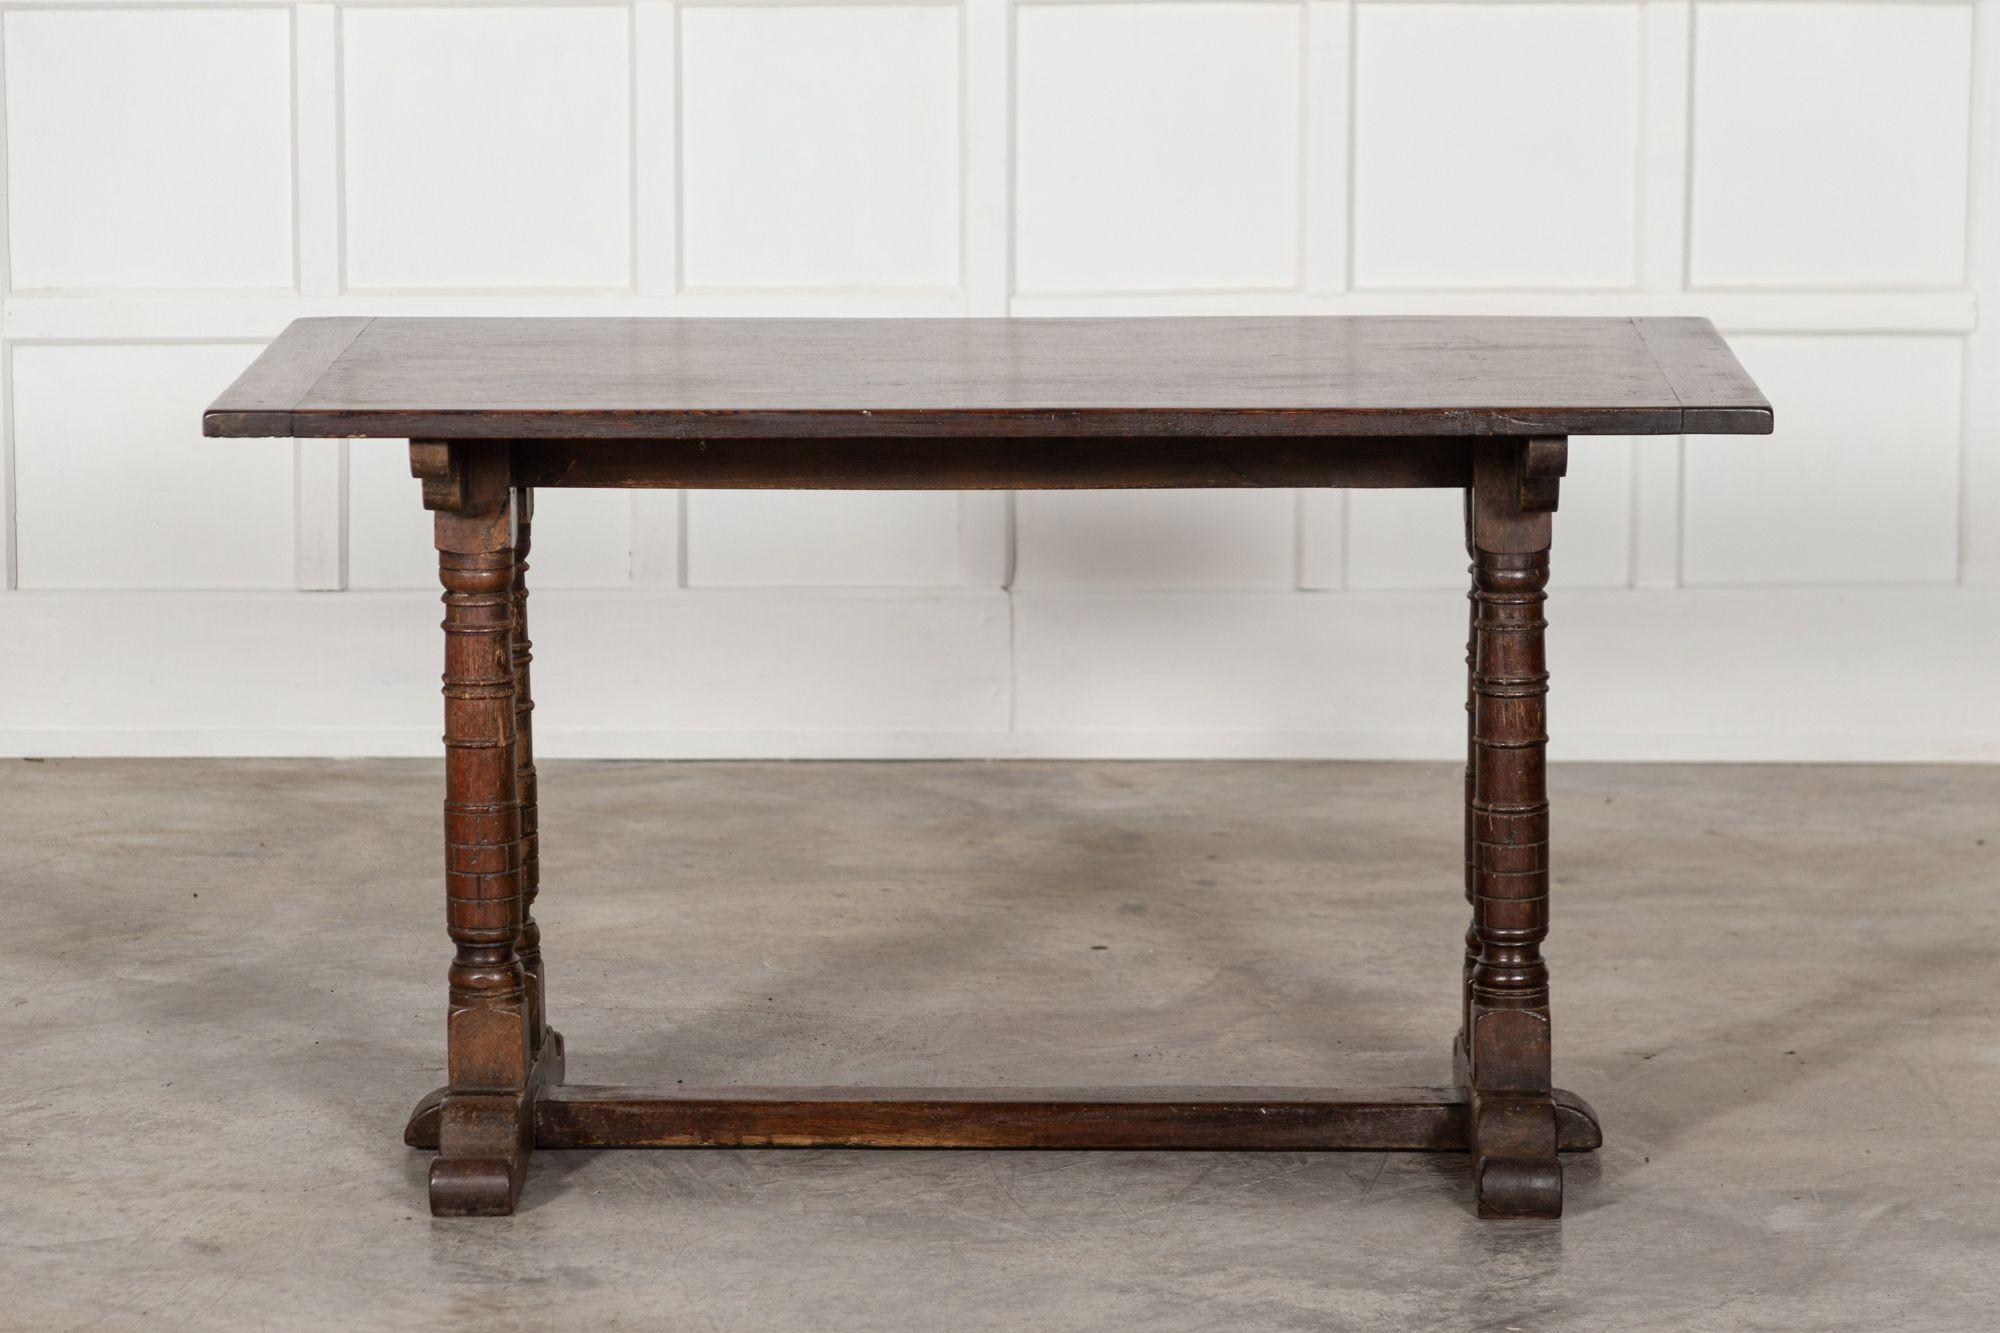 circa 1940
English oak refectory table
sku 1400
Measures:W 138 x D 69 x H 75 cm